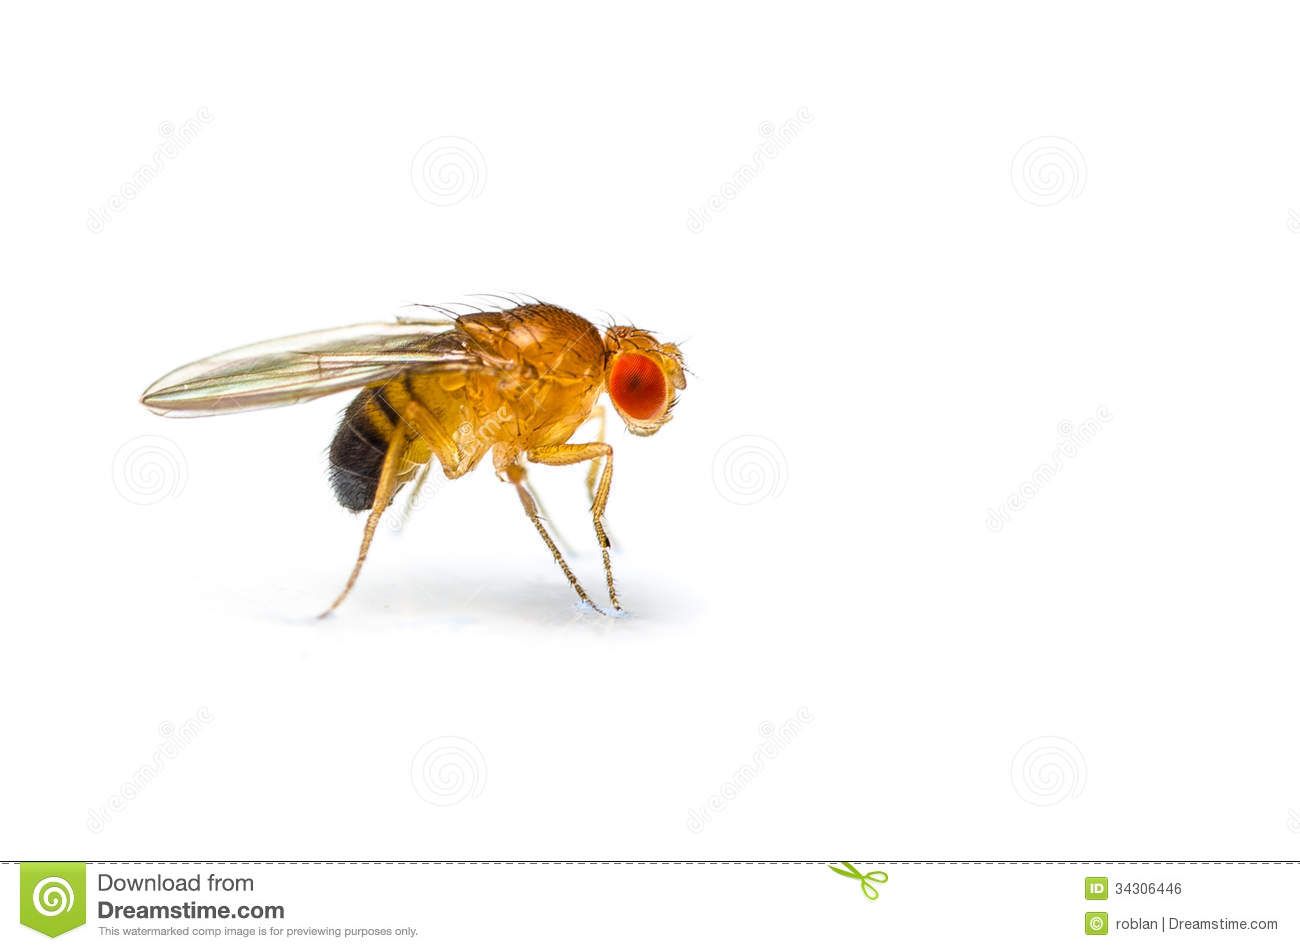 Images for fruit fly. Flies clipart drosophila